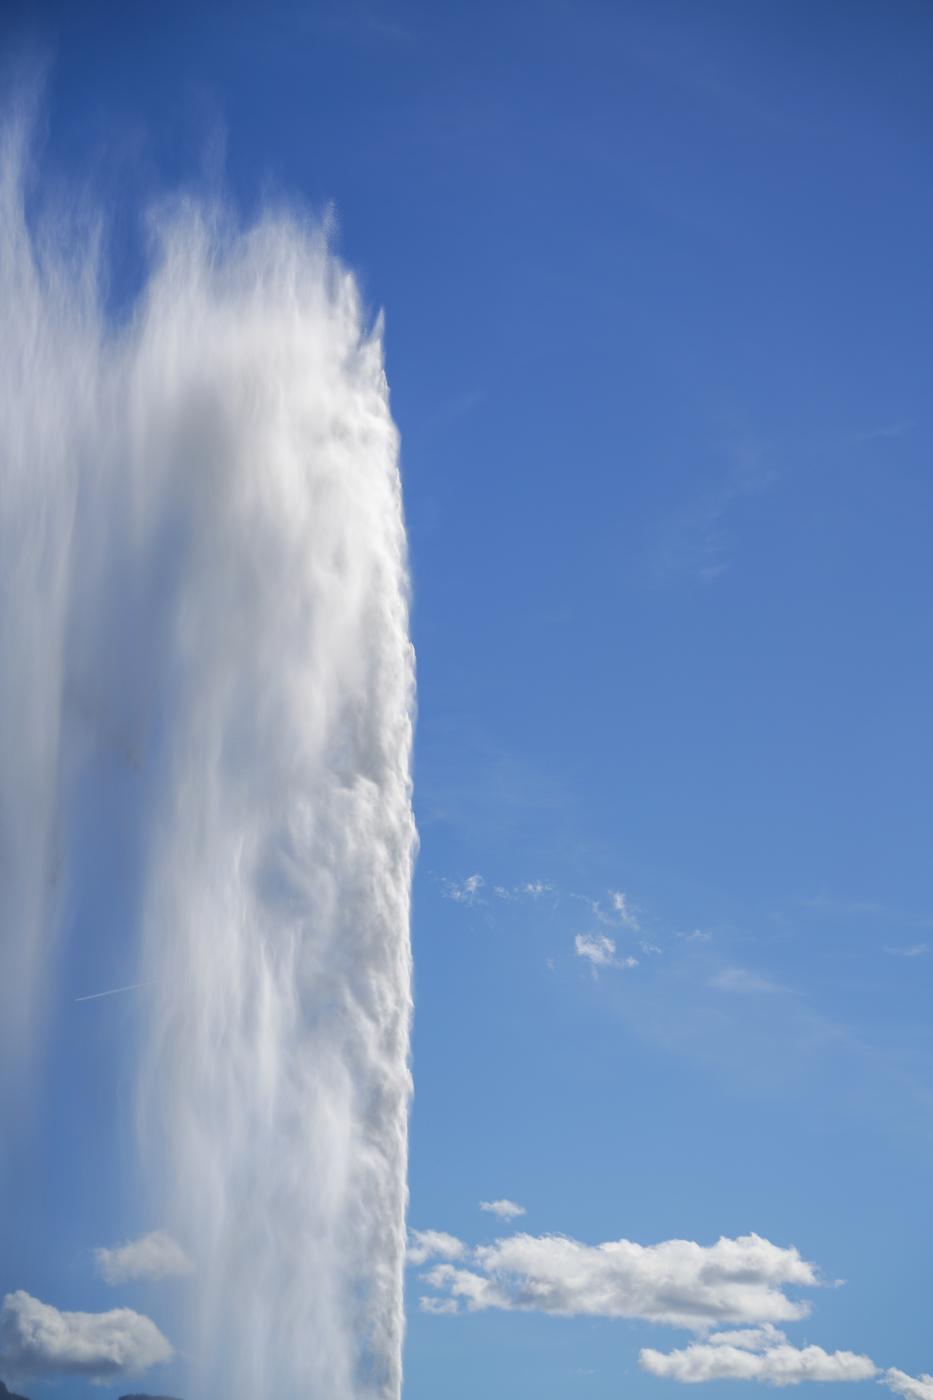 Jet d'eau, Jet of Water between Clouds Geneva | Buy this image